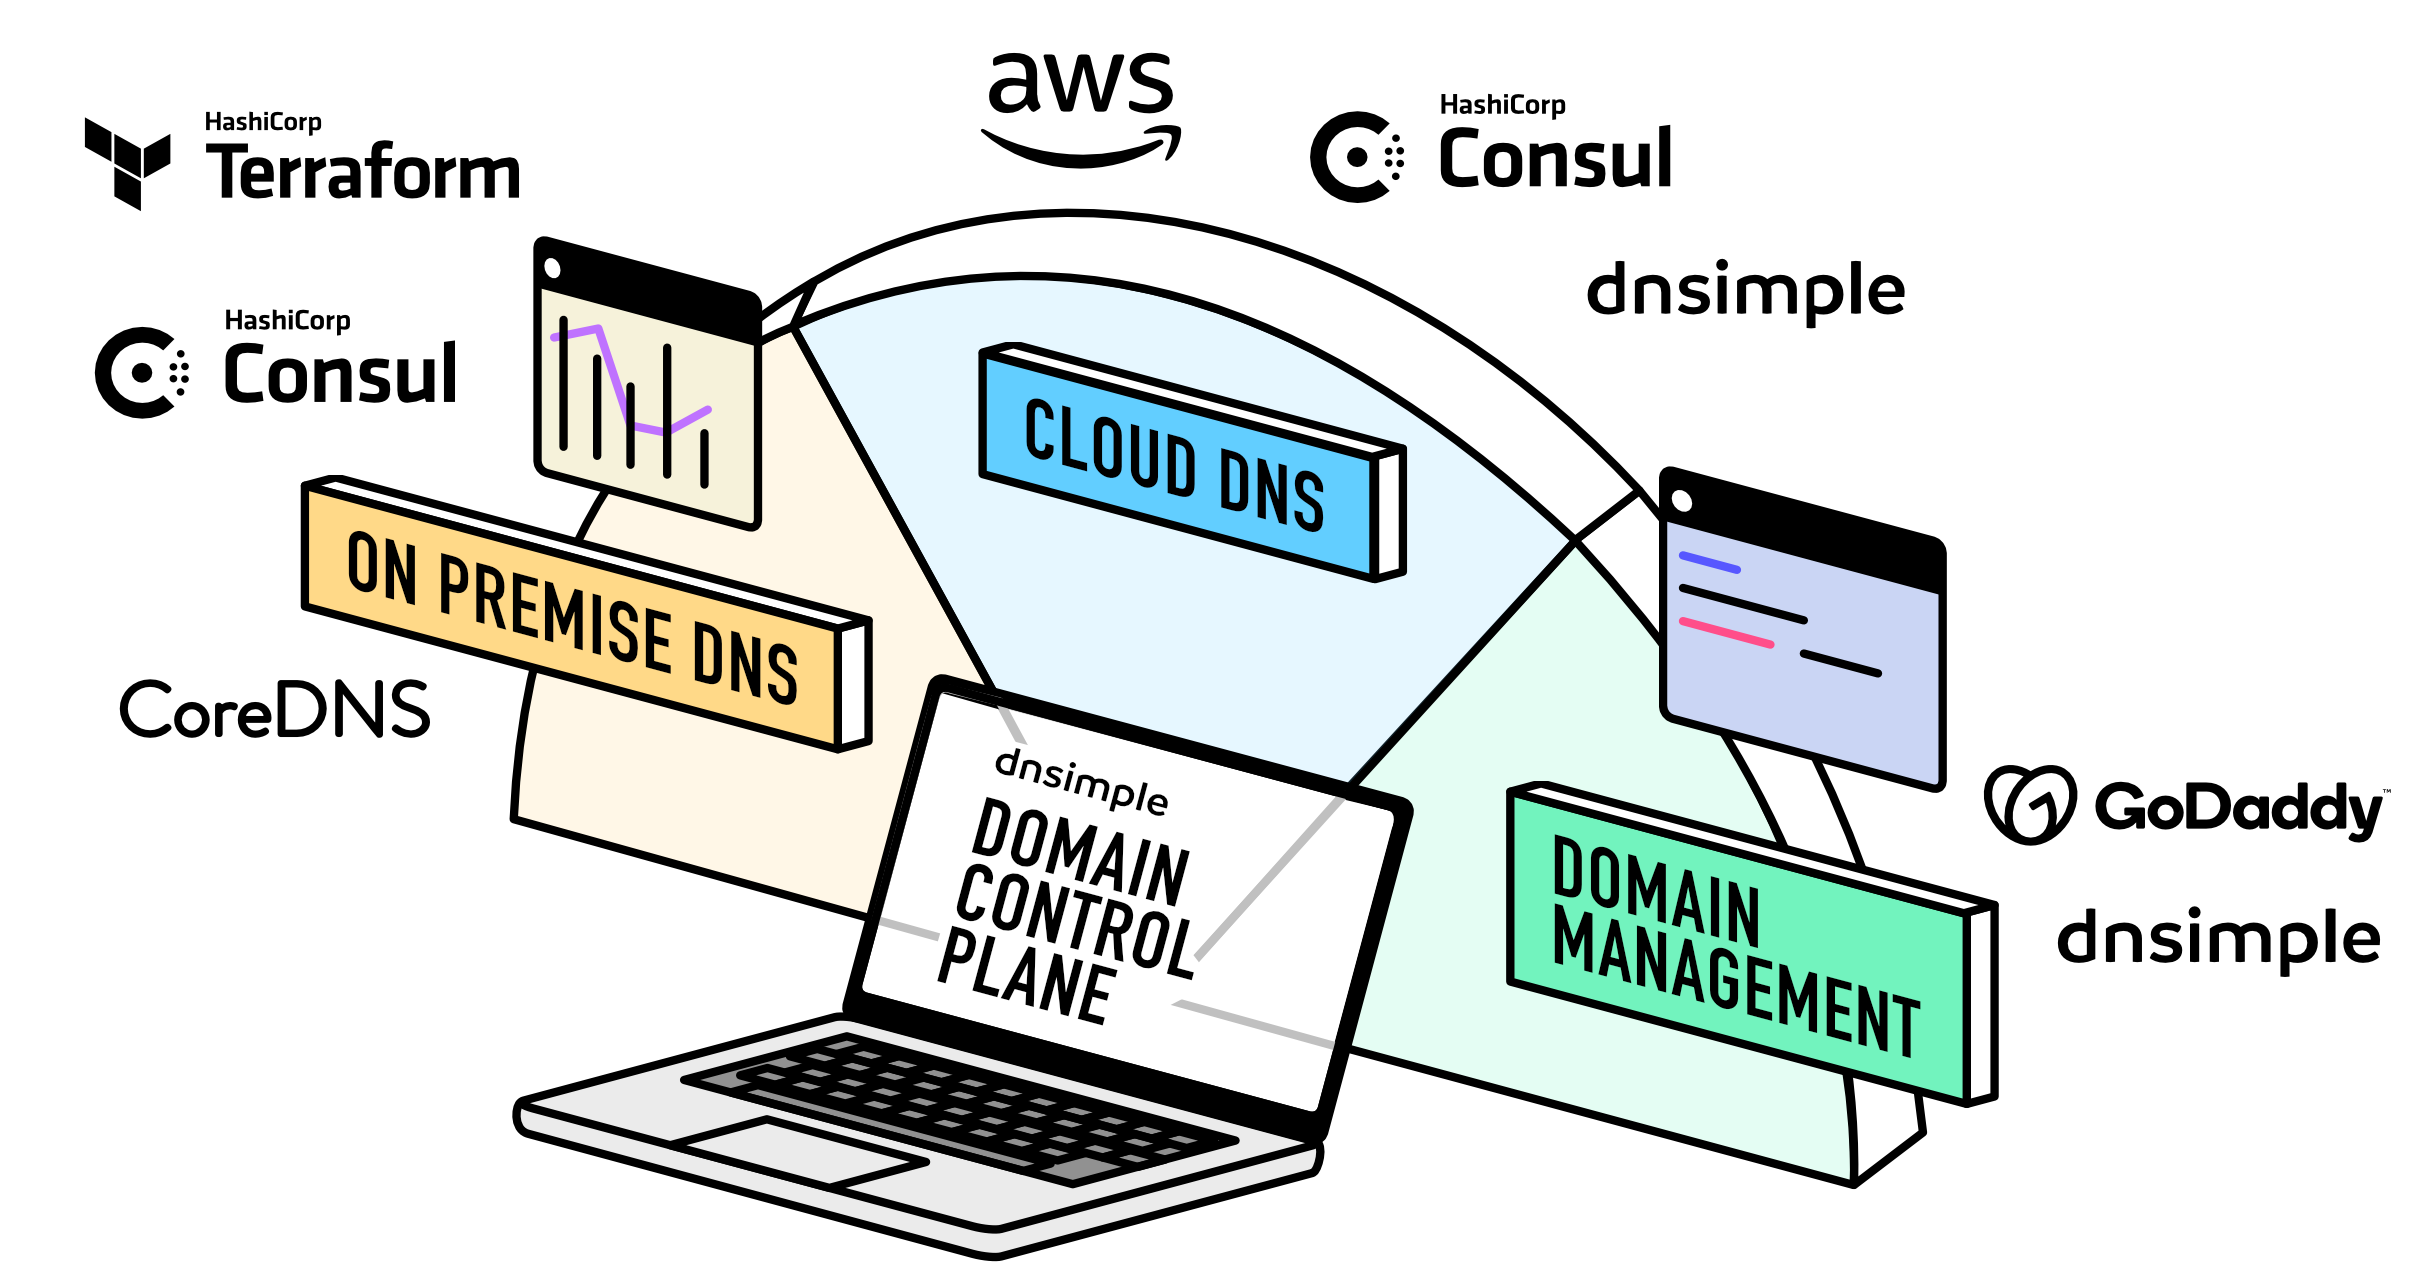 Domain Control Plane Illustration